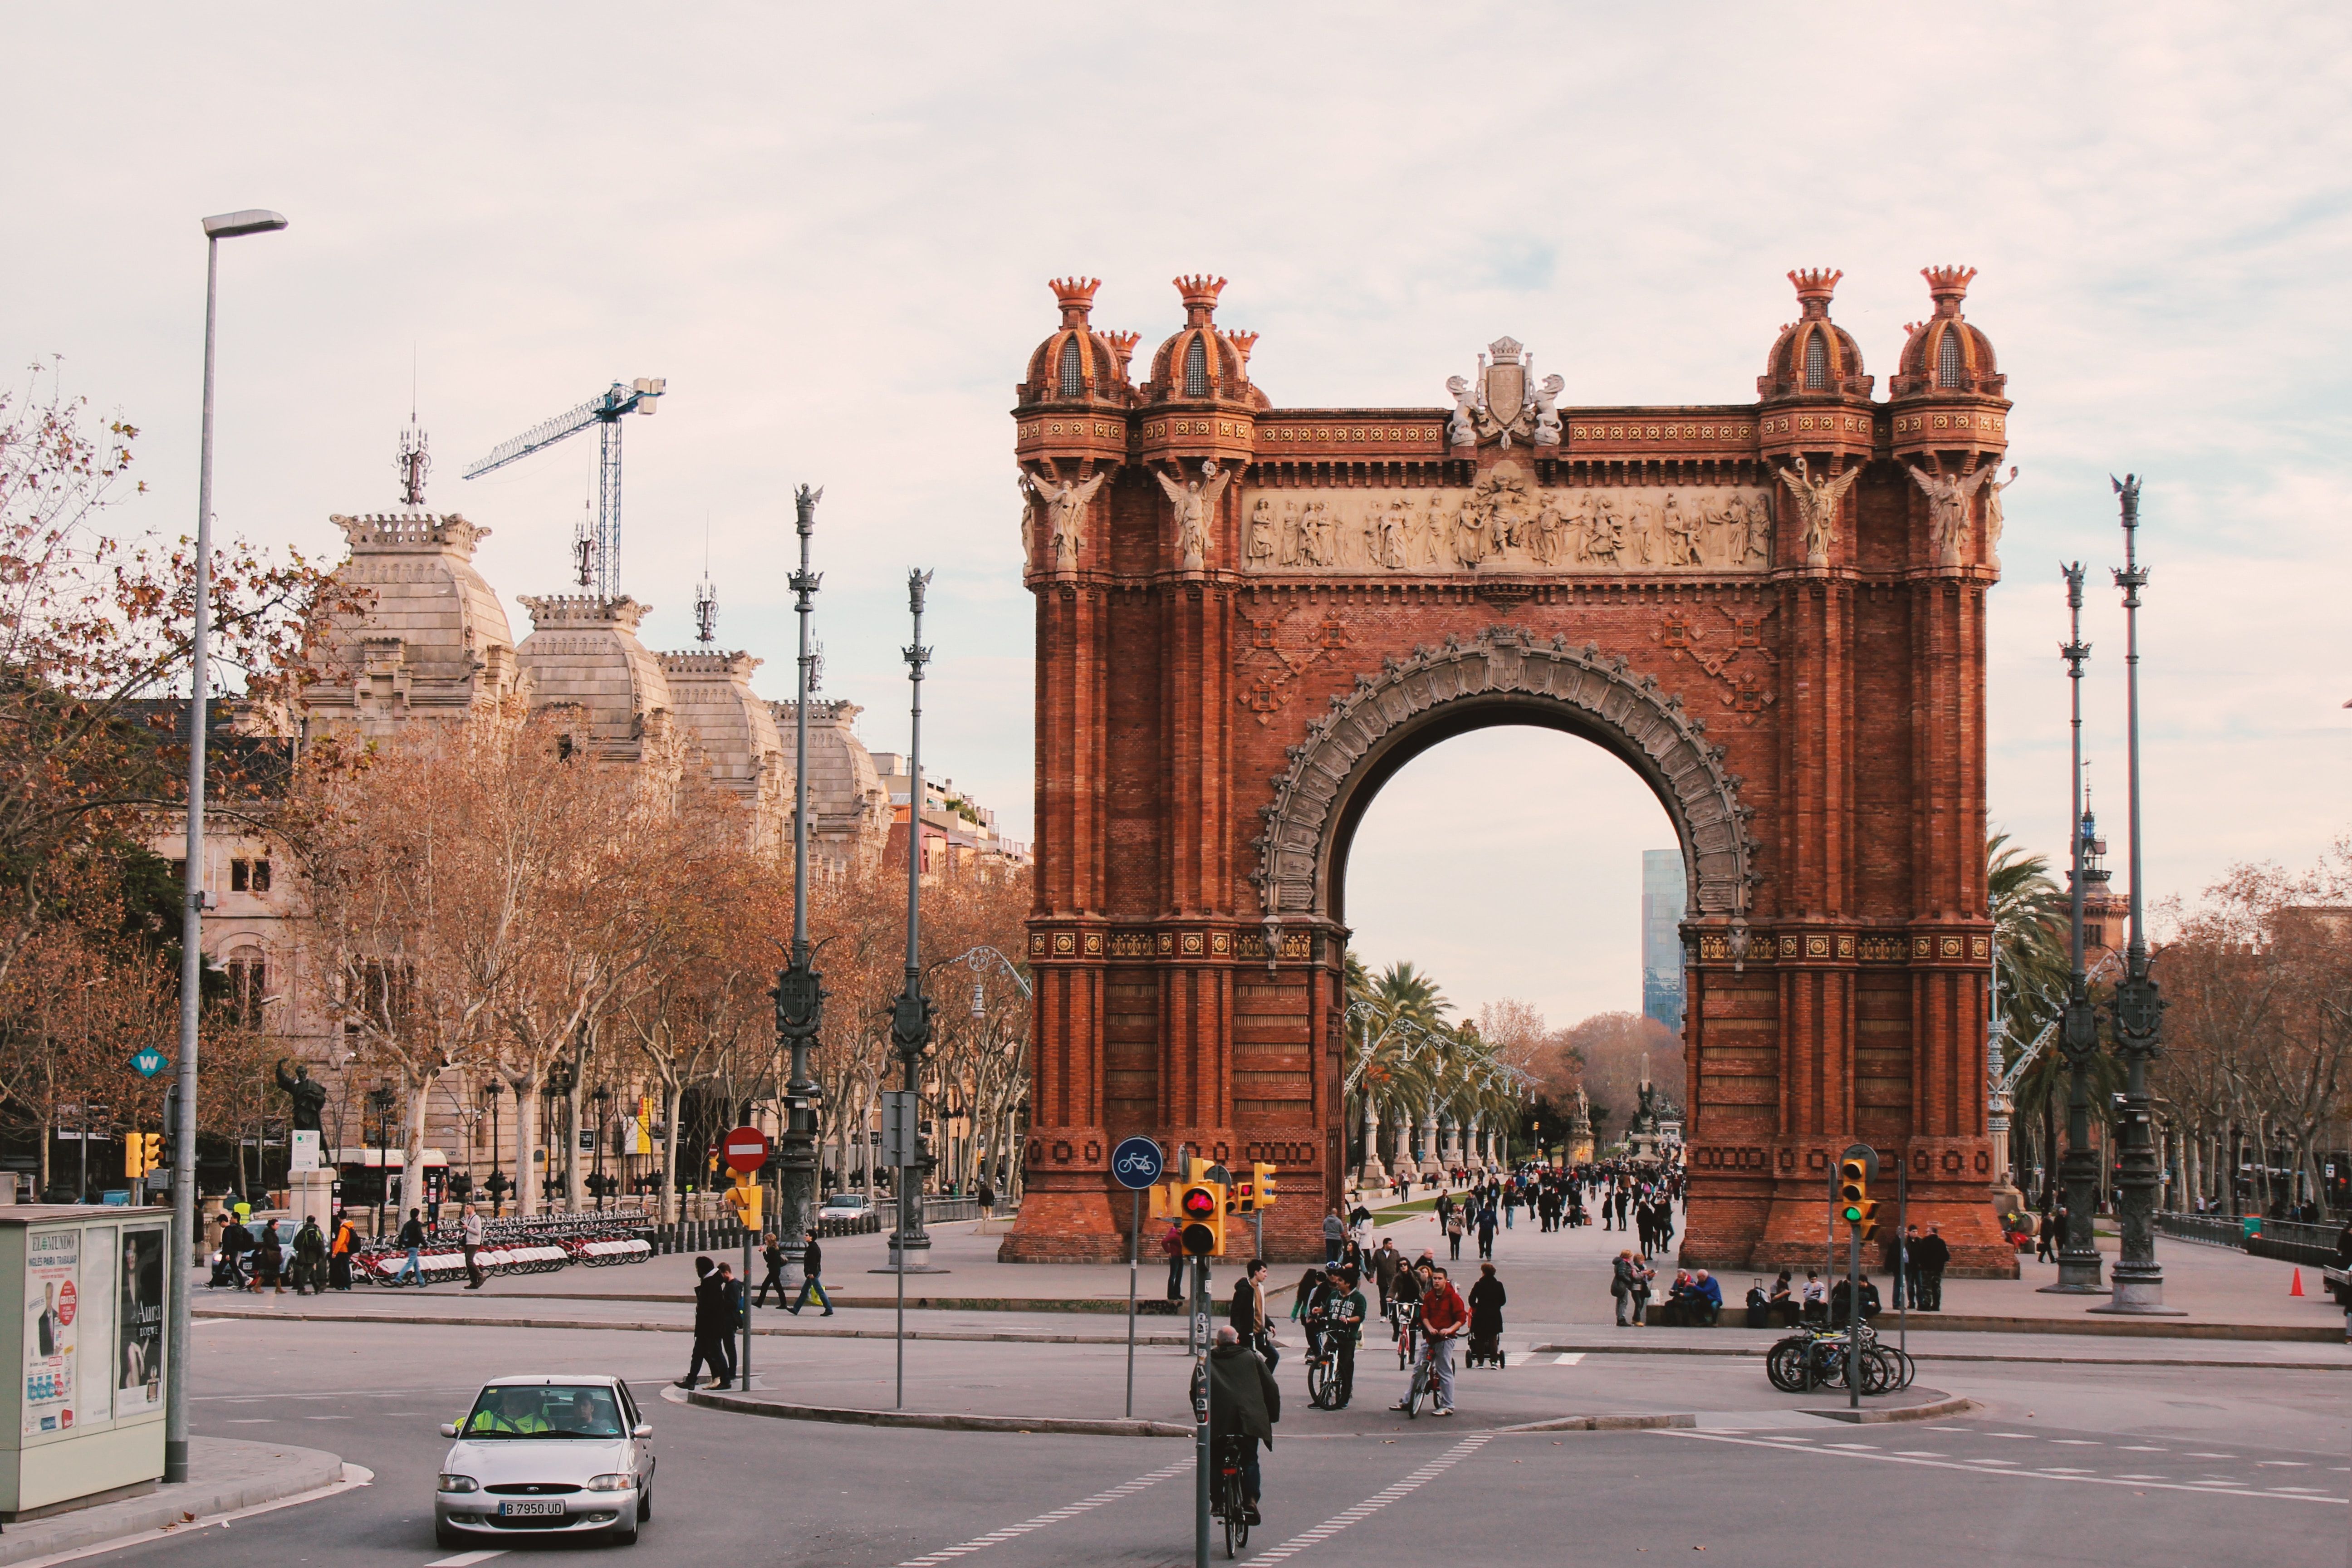 The arc of triumph in Barcelona.